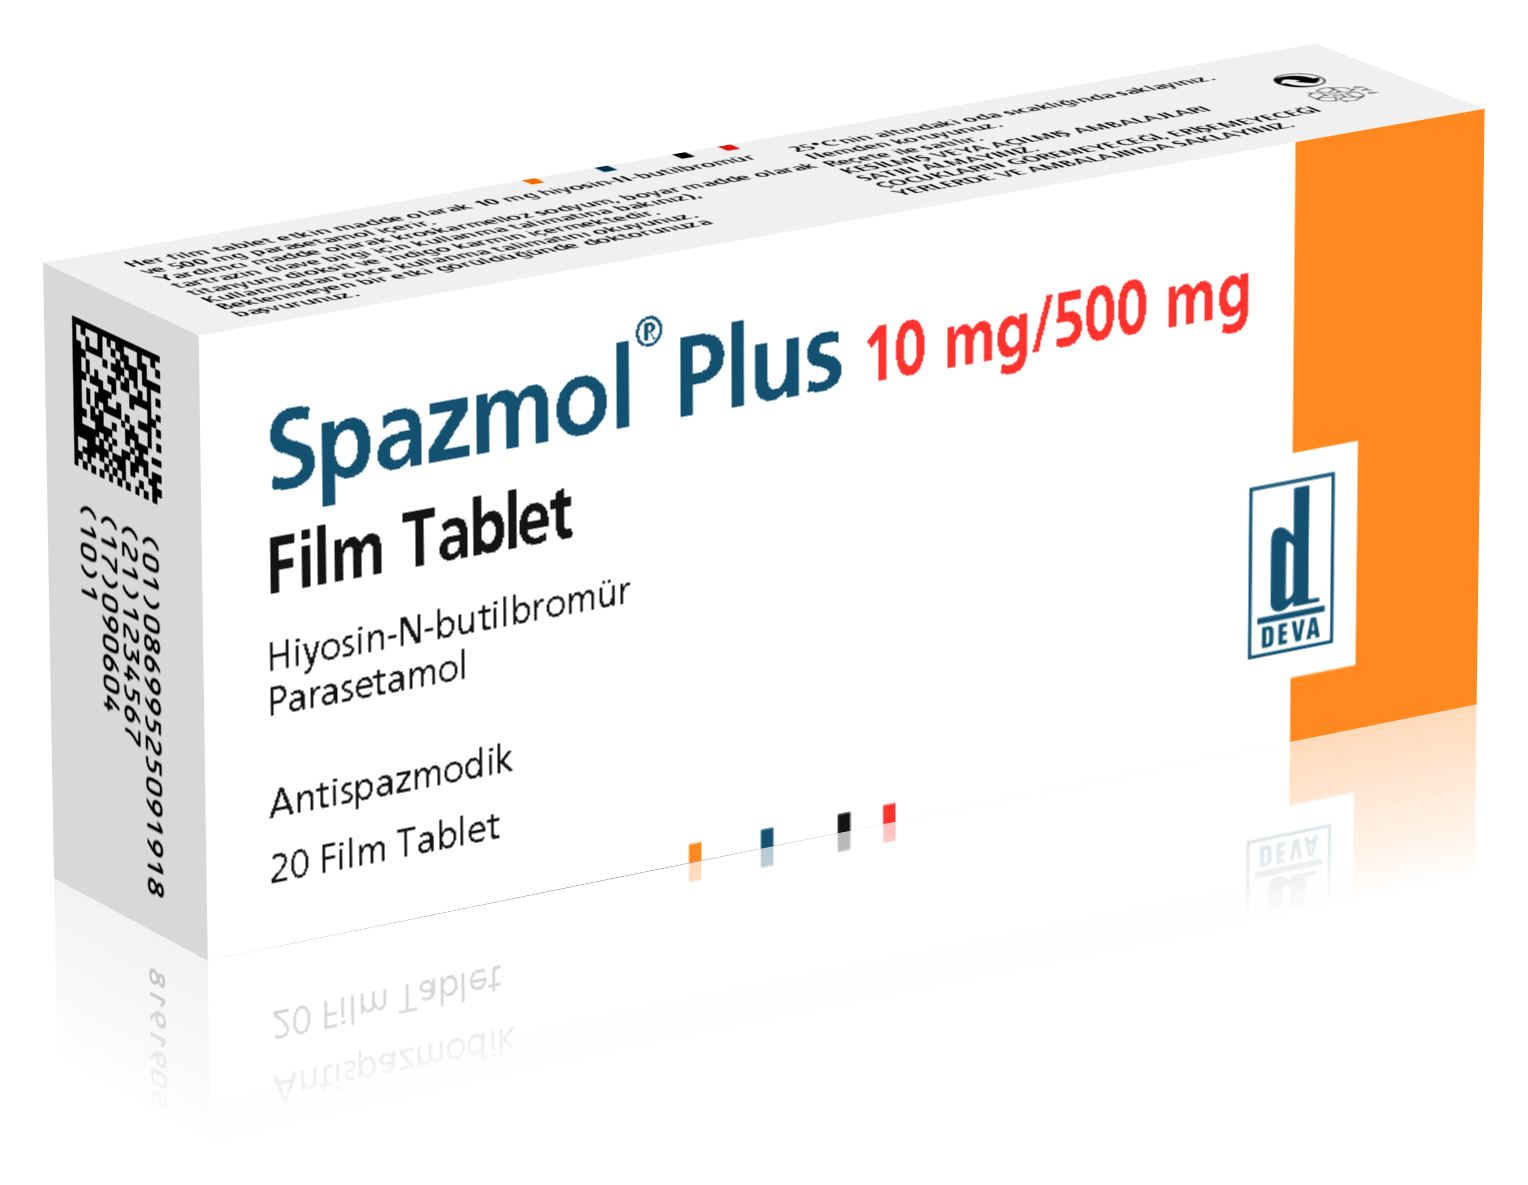 nolvadex (tamoxifen) 20 mg tablets price in india